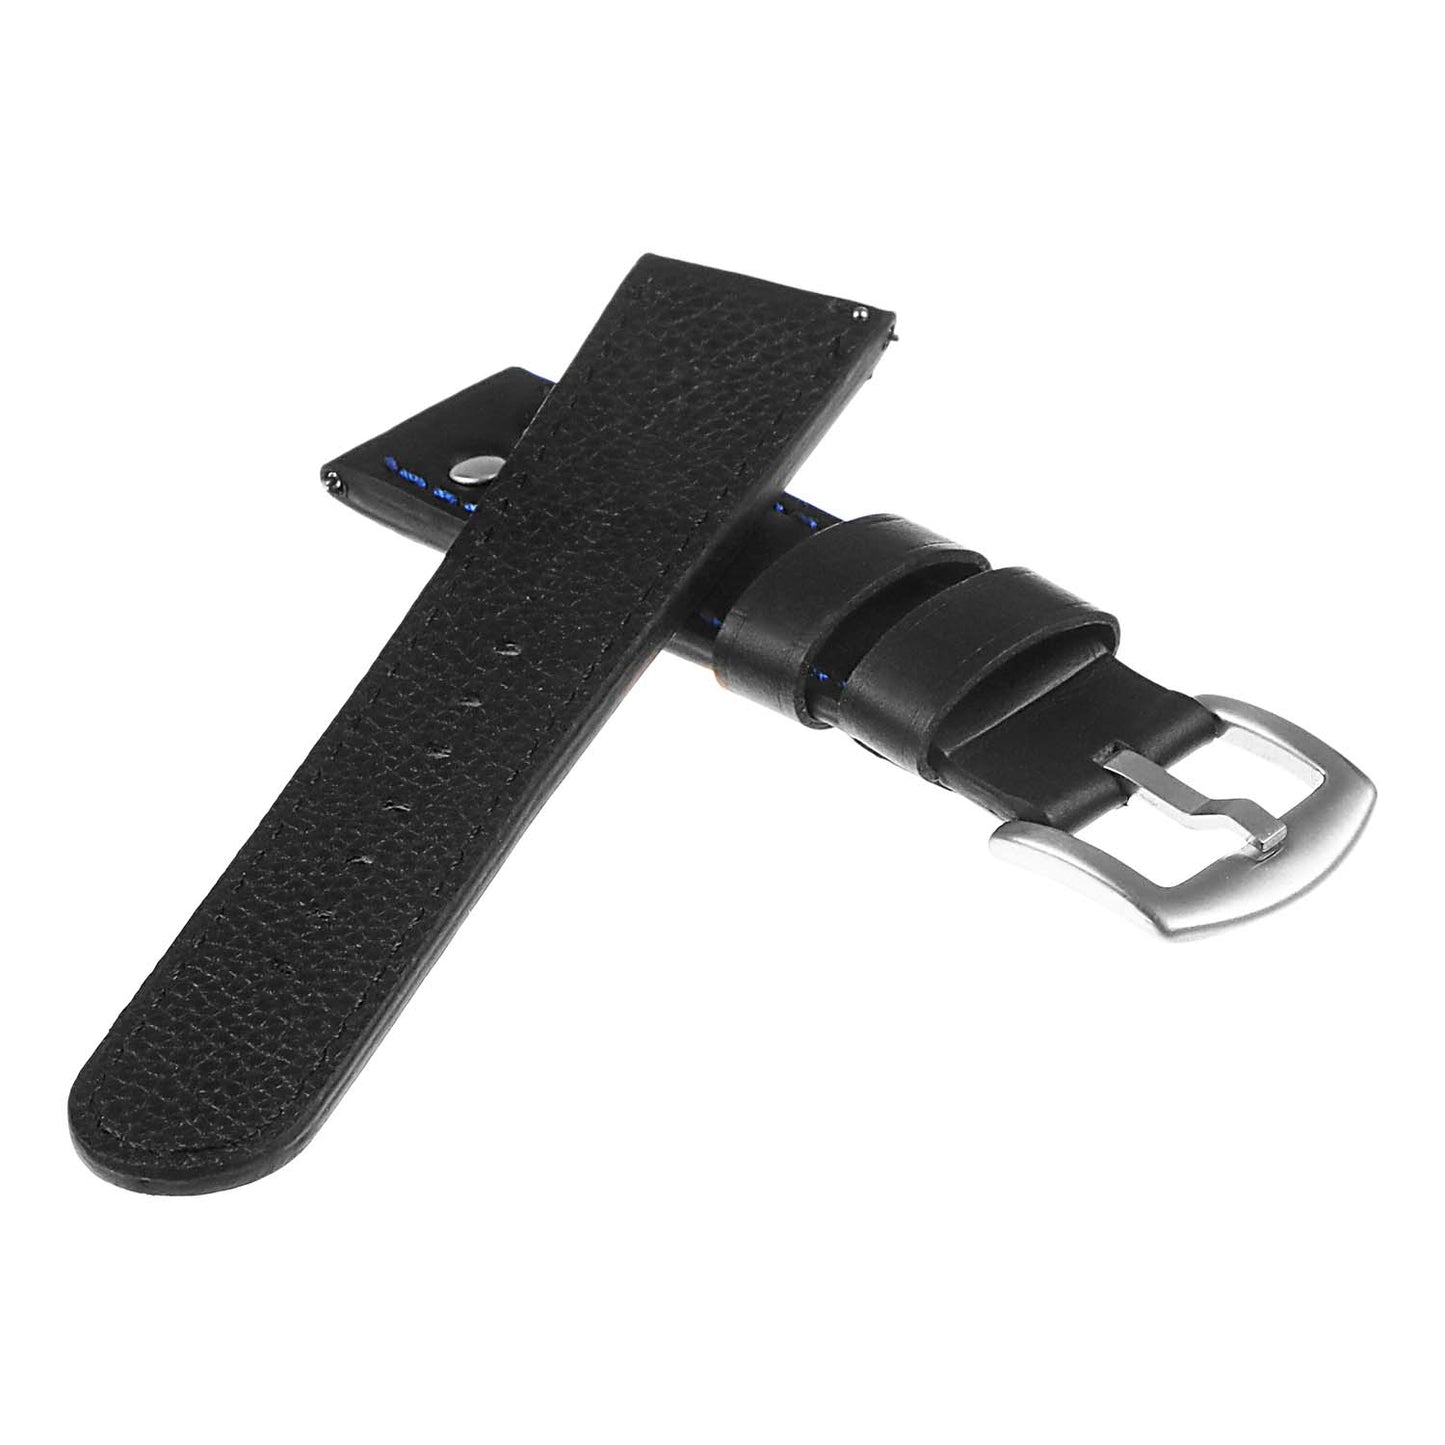 DASSARI Pilot Leather Watch Band for Samsung Galaxy Watch Active